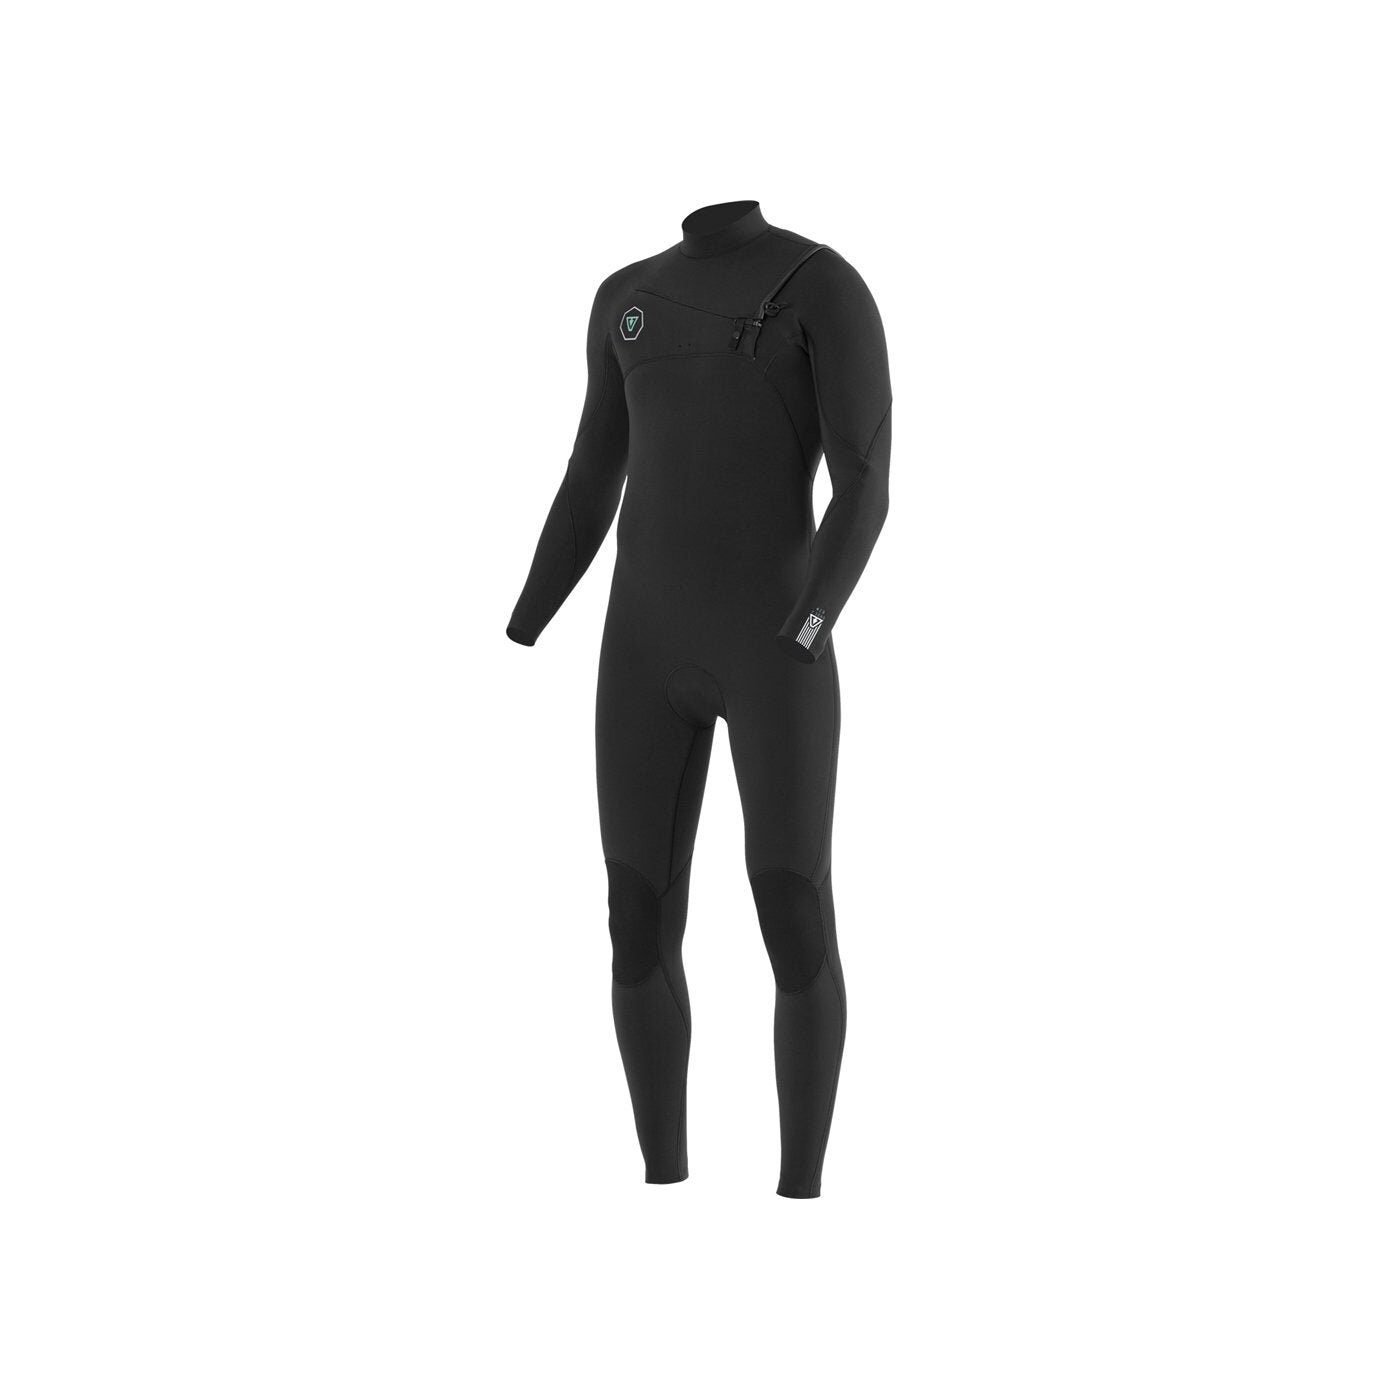 VIssla 7 seas 3-2 full chest zip wetsuit - black